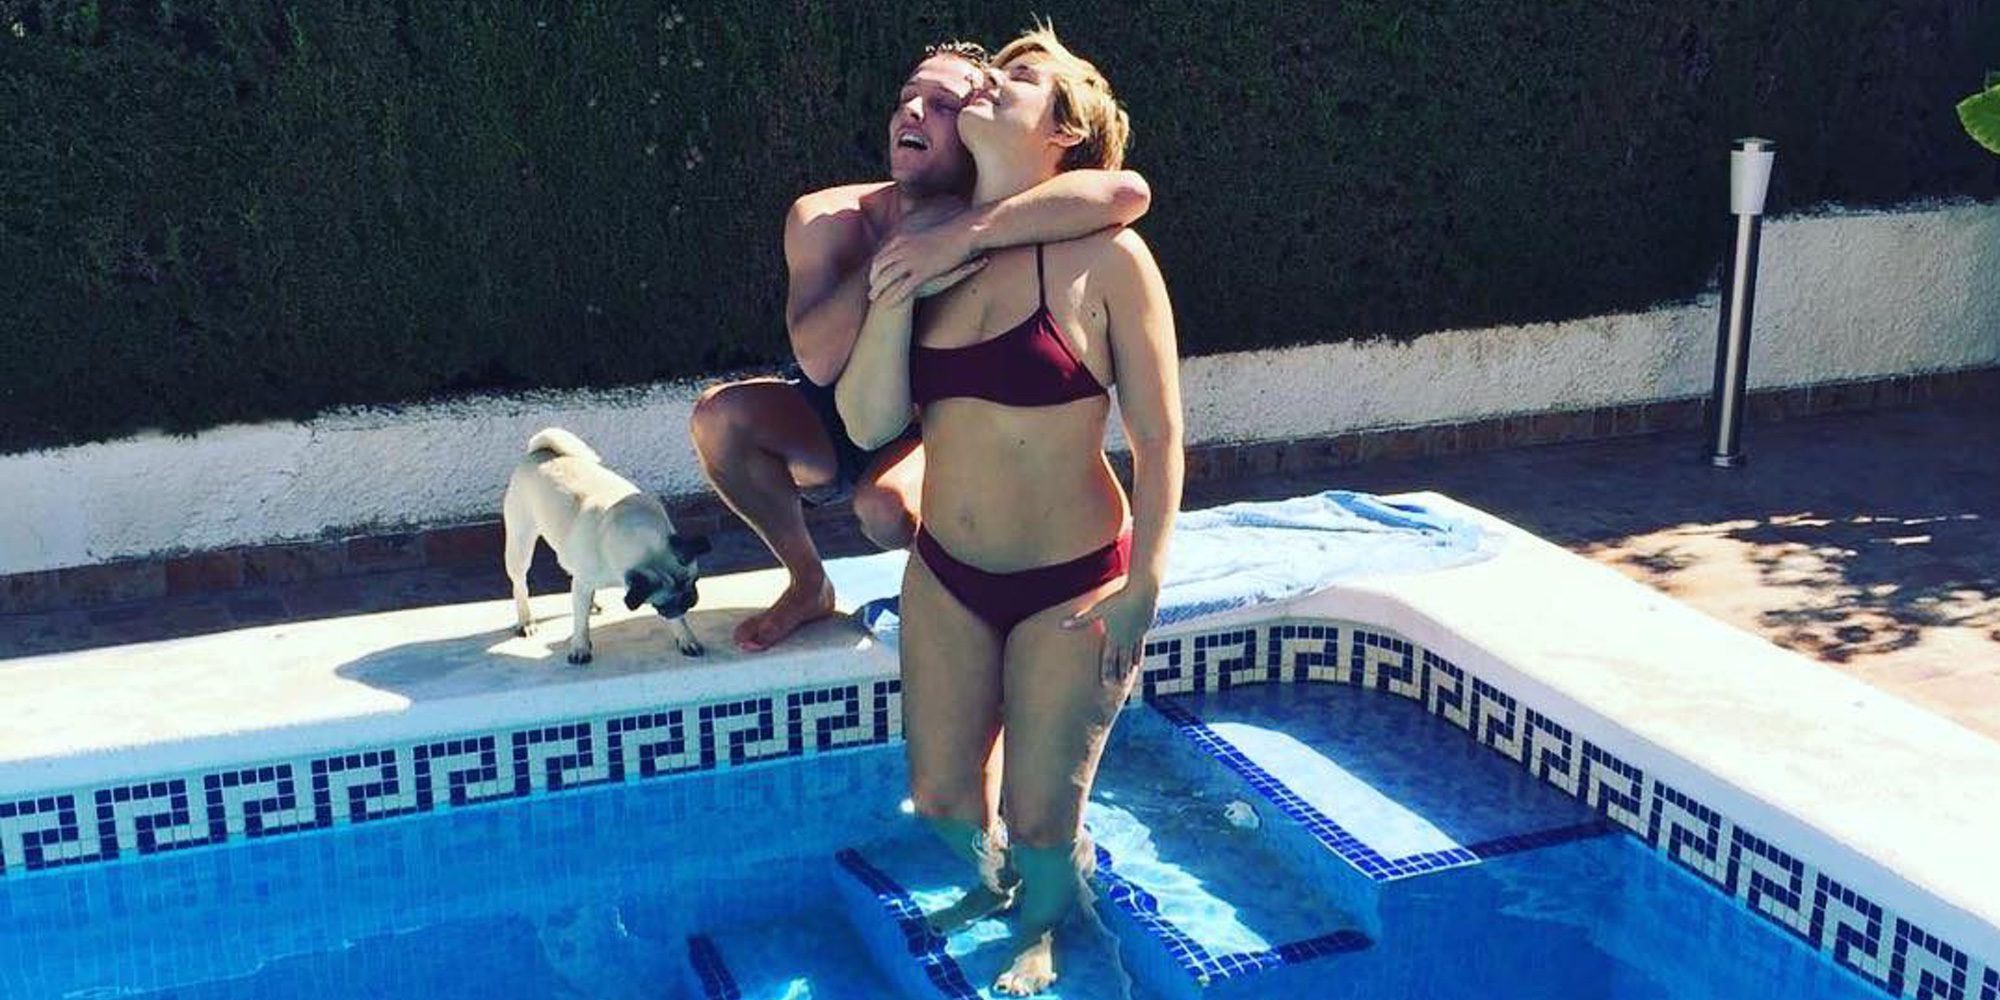 Tania Llasera vuelve a posar sin complejos en bikini en pleno otoño: "Sigo siendo una talla 44"